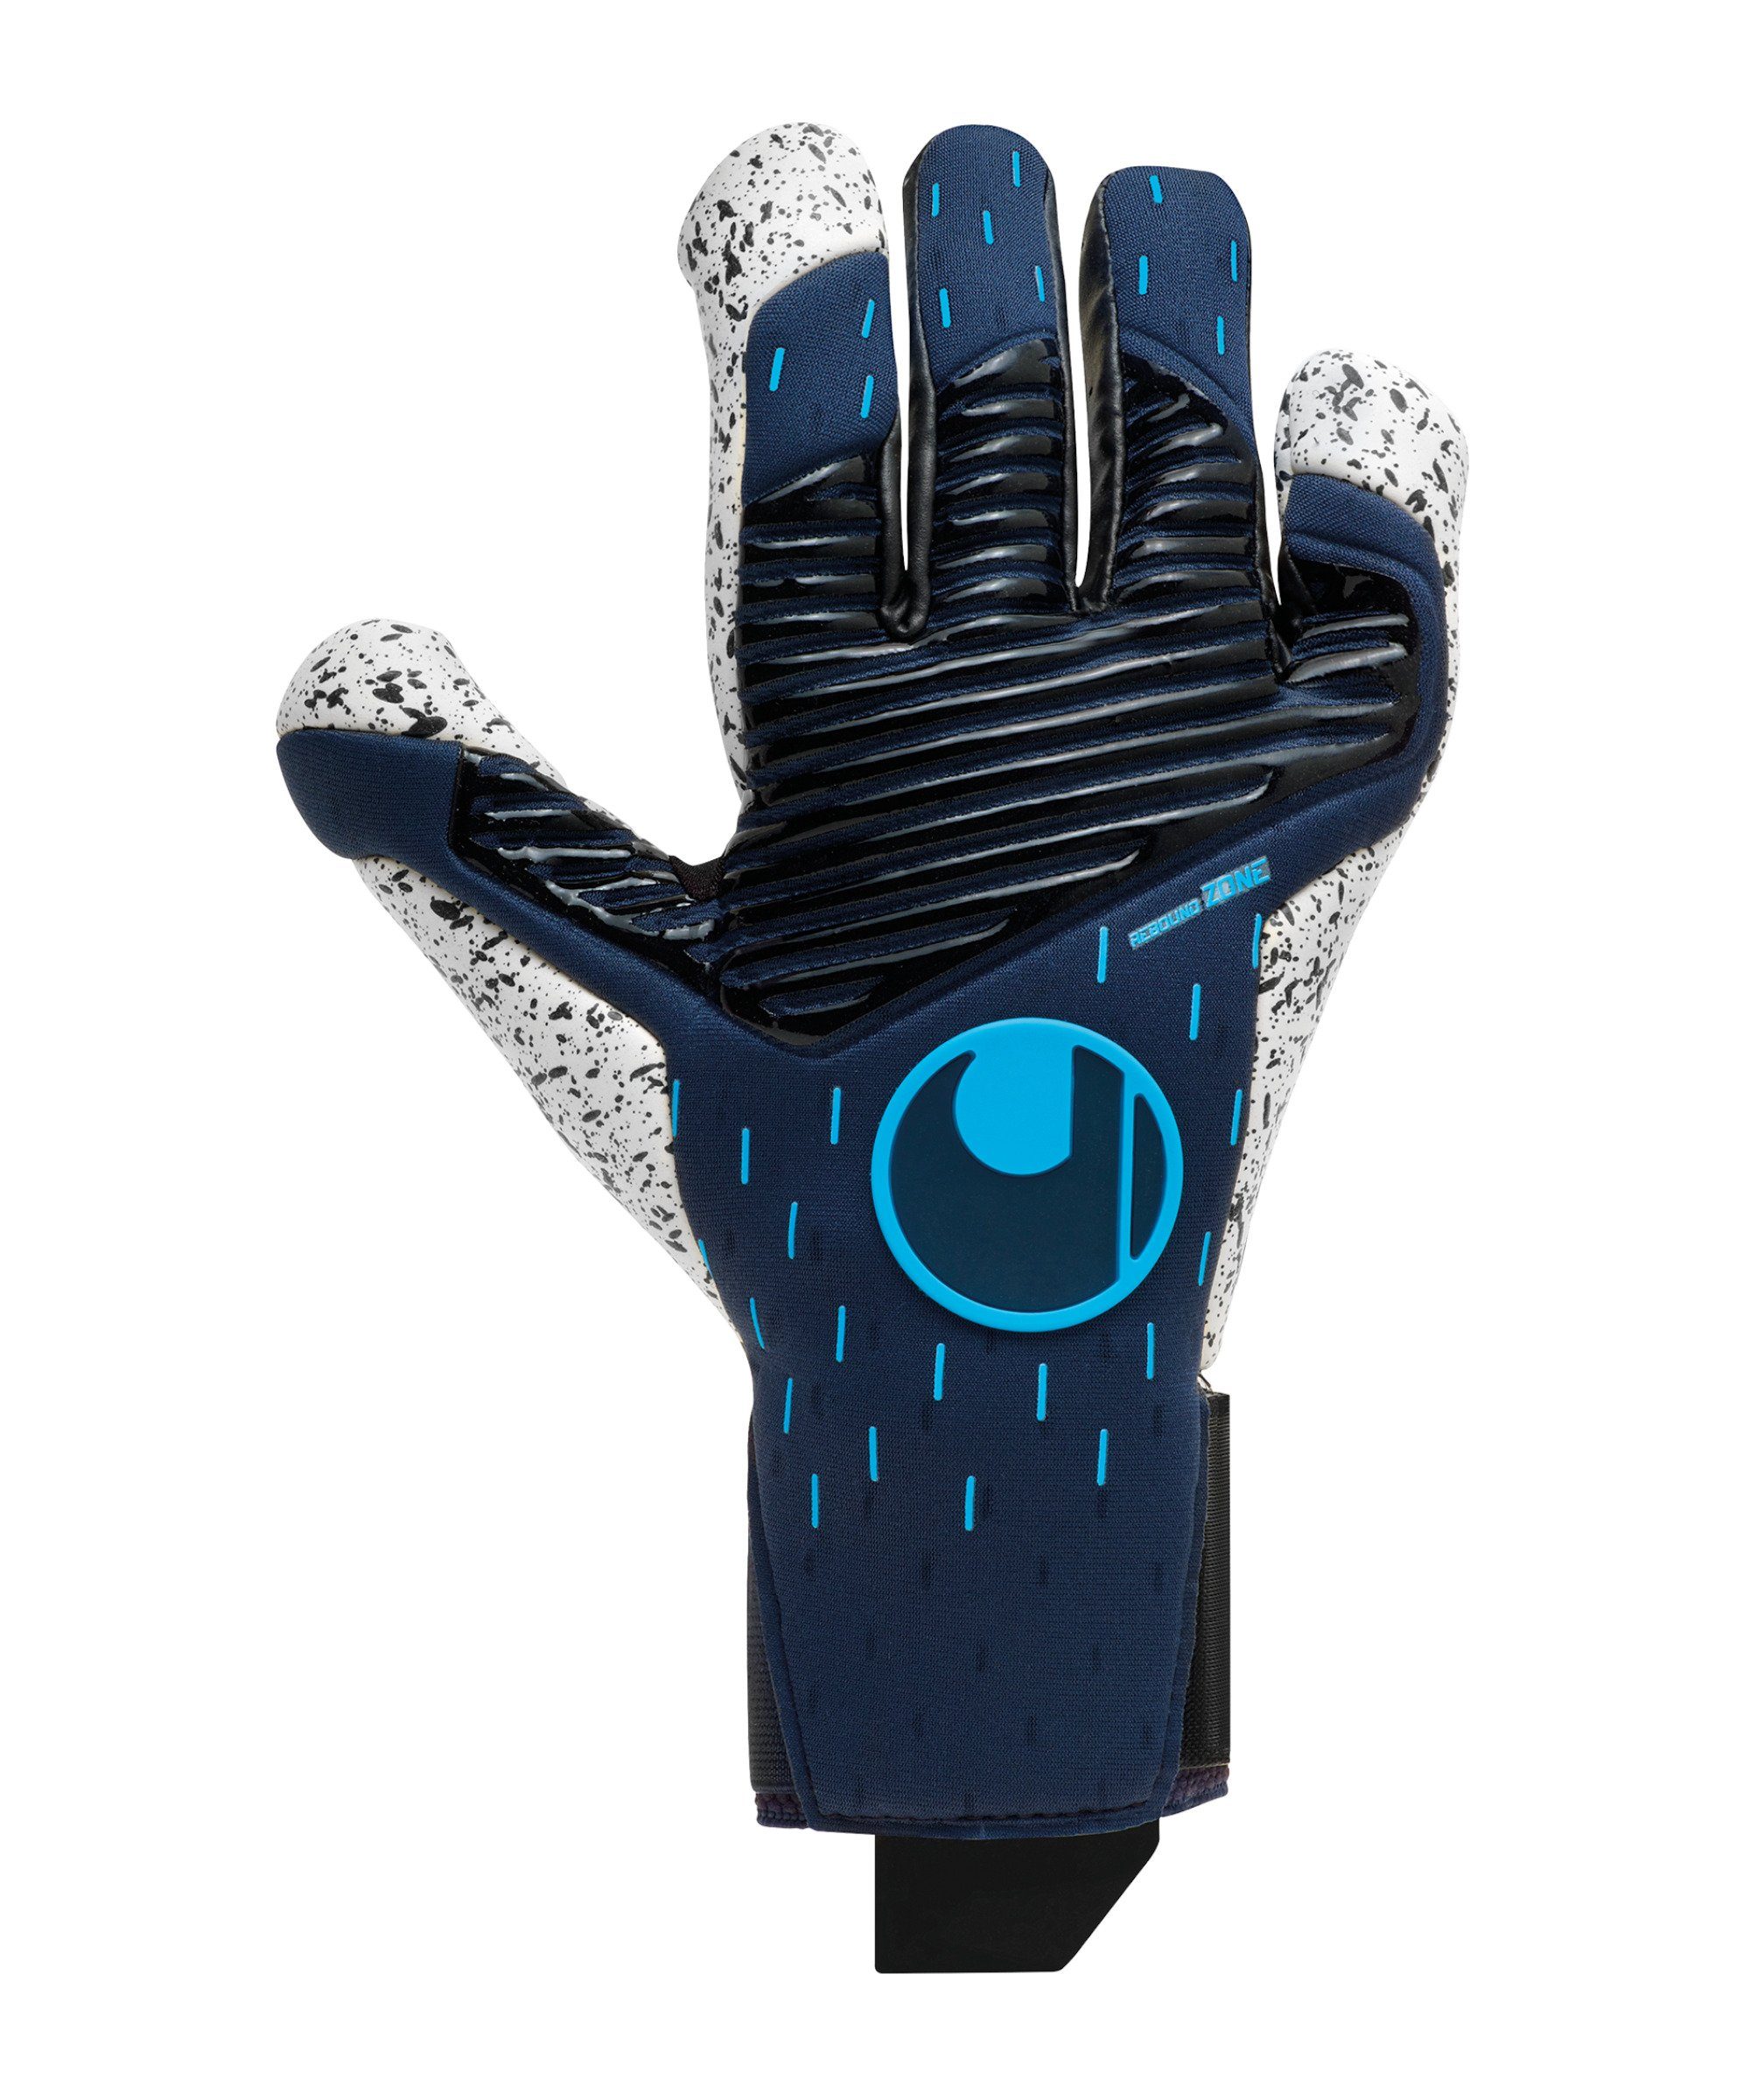 Speed Contact TW-Handschuhe uhlsport Surround Finger Supergrip+ Torwarthandschuhe